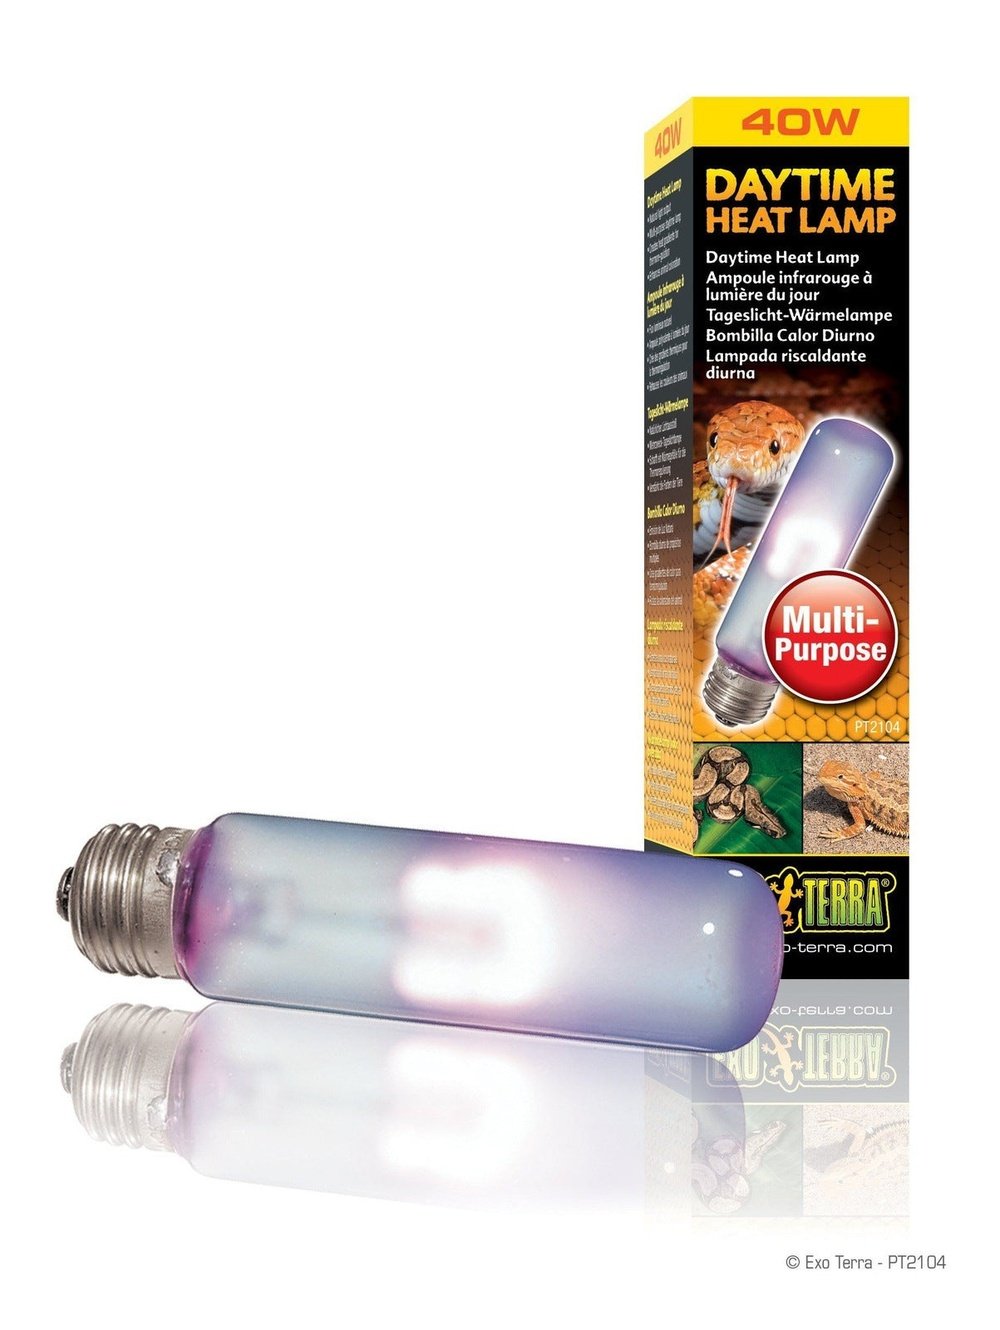 Exo Terra Daytime Heat Lamp, 40w - Dubia.com